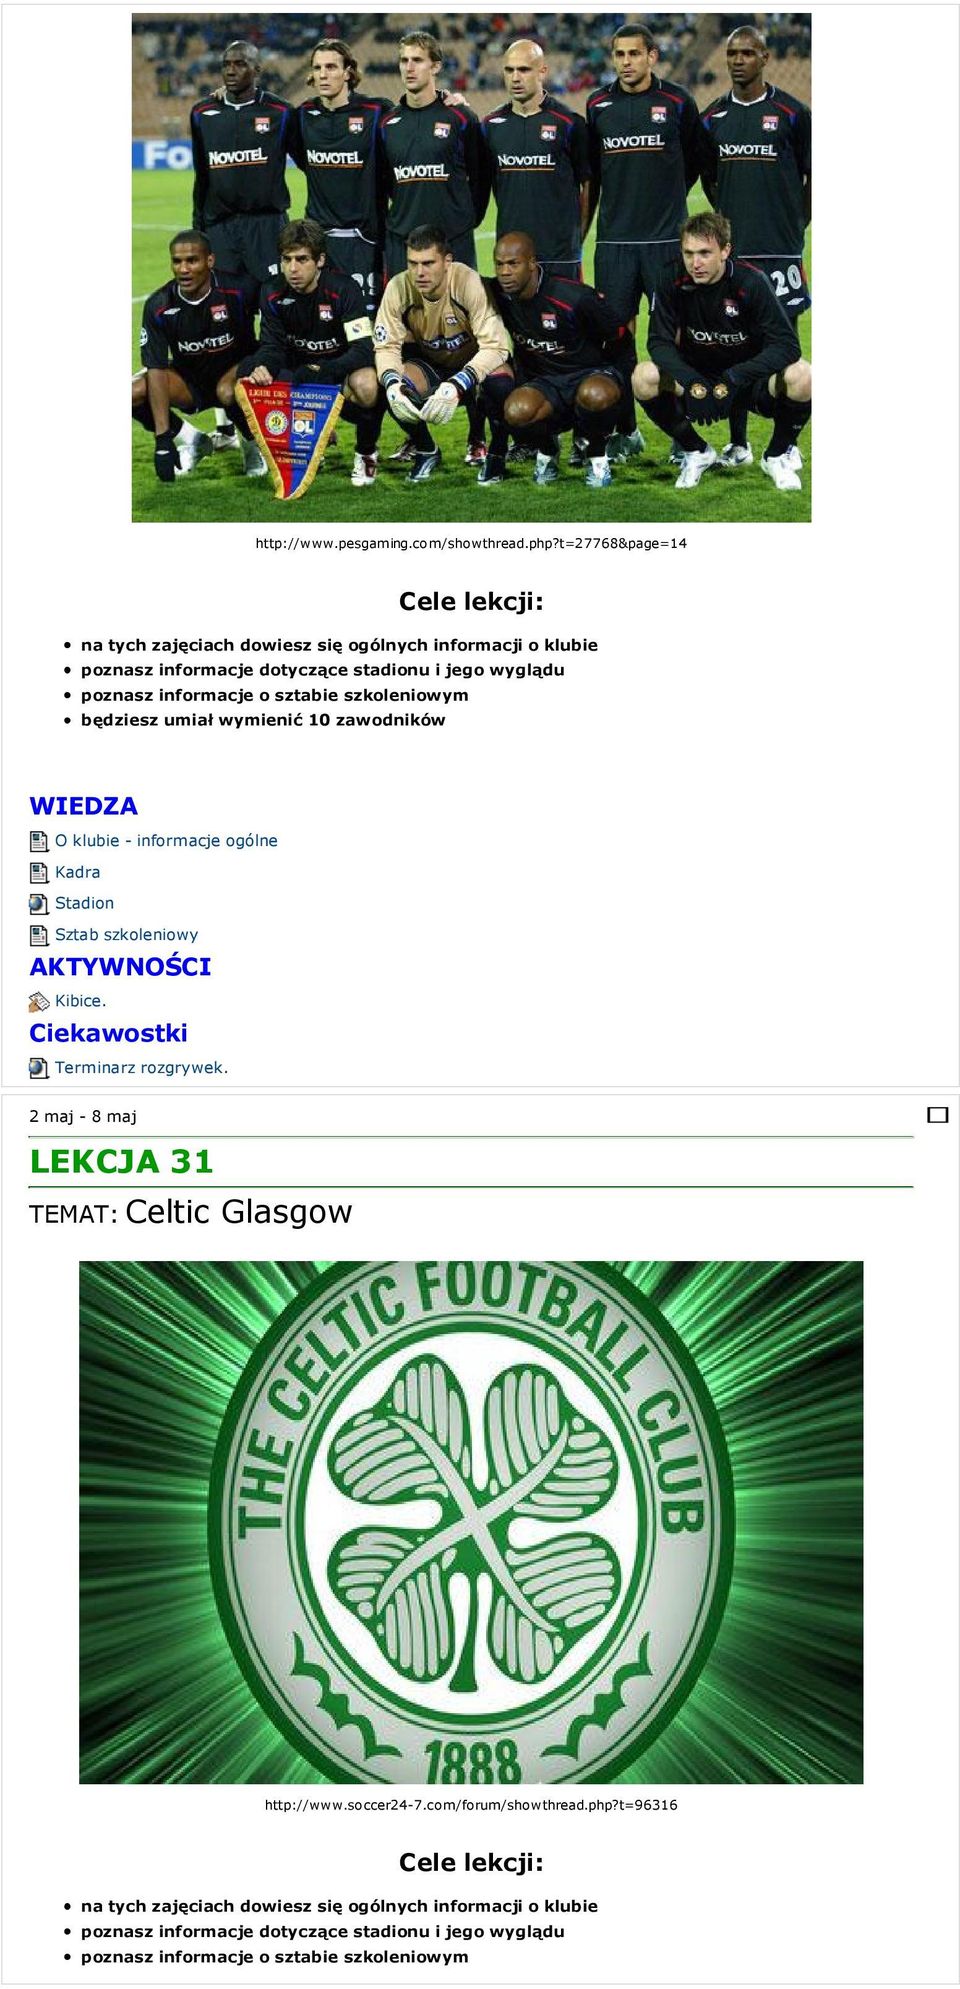 2 maj - 8 maj LEKCJA 31 TEMAT: Celtic Glasgow